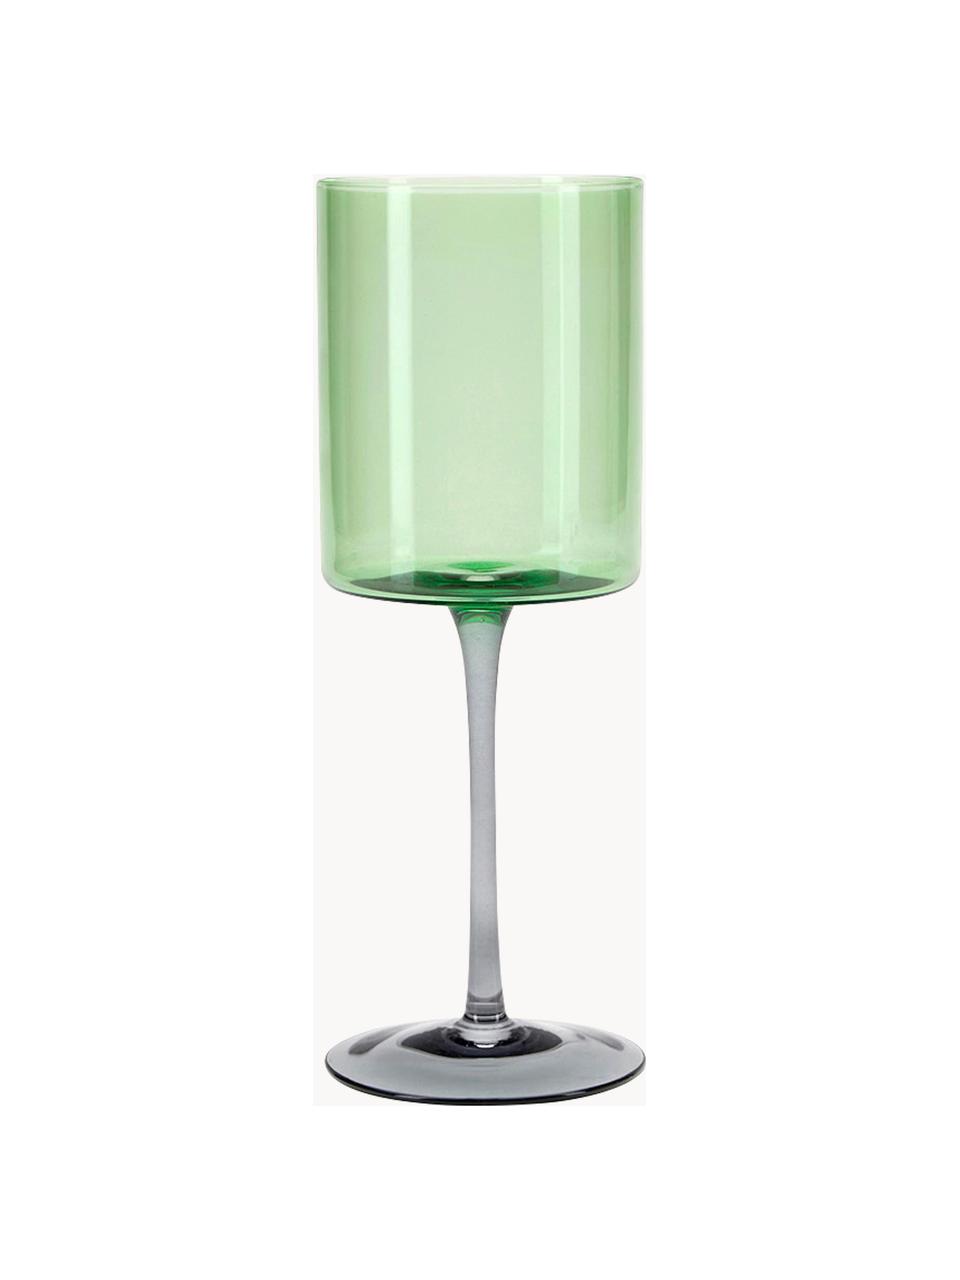 Weingläser Lilly, 2 Stück, Glas, Grün, Grau, Ø 9 x H 24 cm, 430 ml